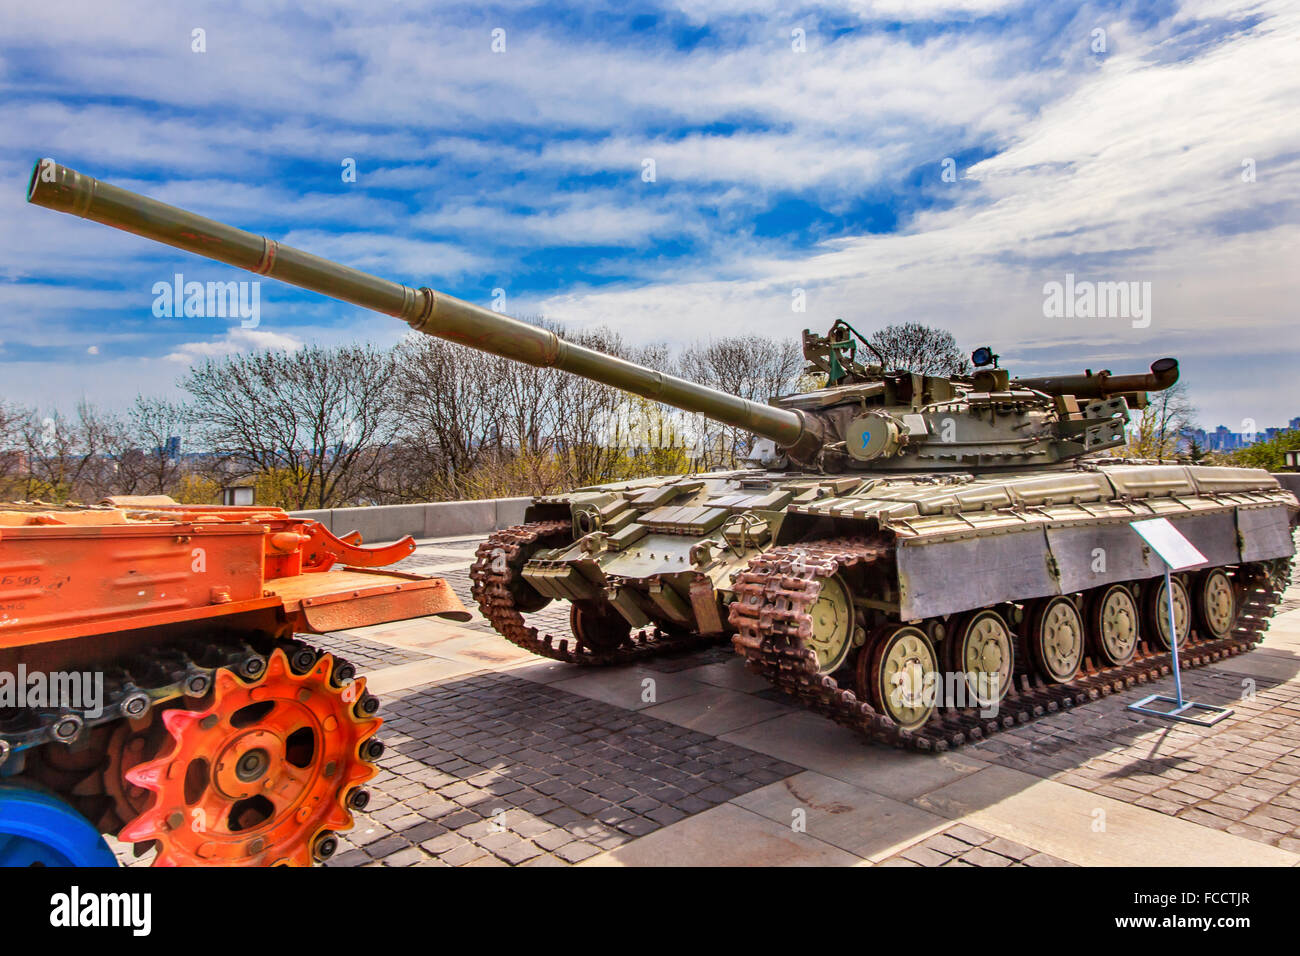 Russischer moderne Panzer gefangen ukrainische Truppen den letzten Konflikt Ostukraine Krieg Denkmal Museum Kiew Ukraine Stockfoto